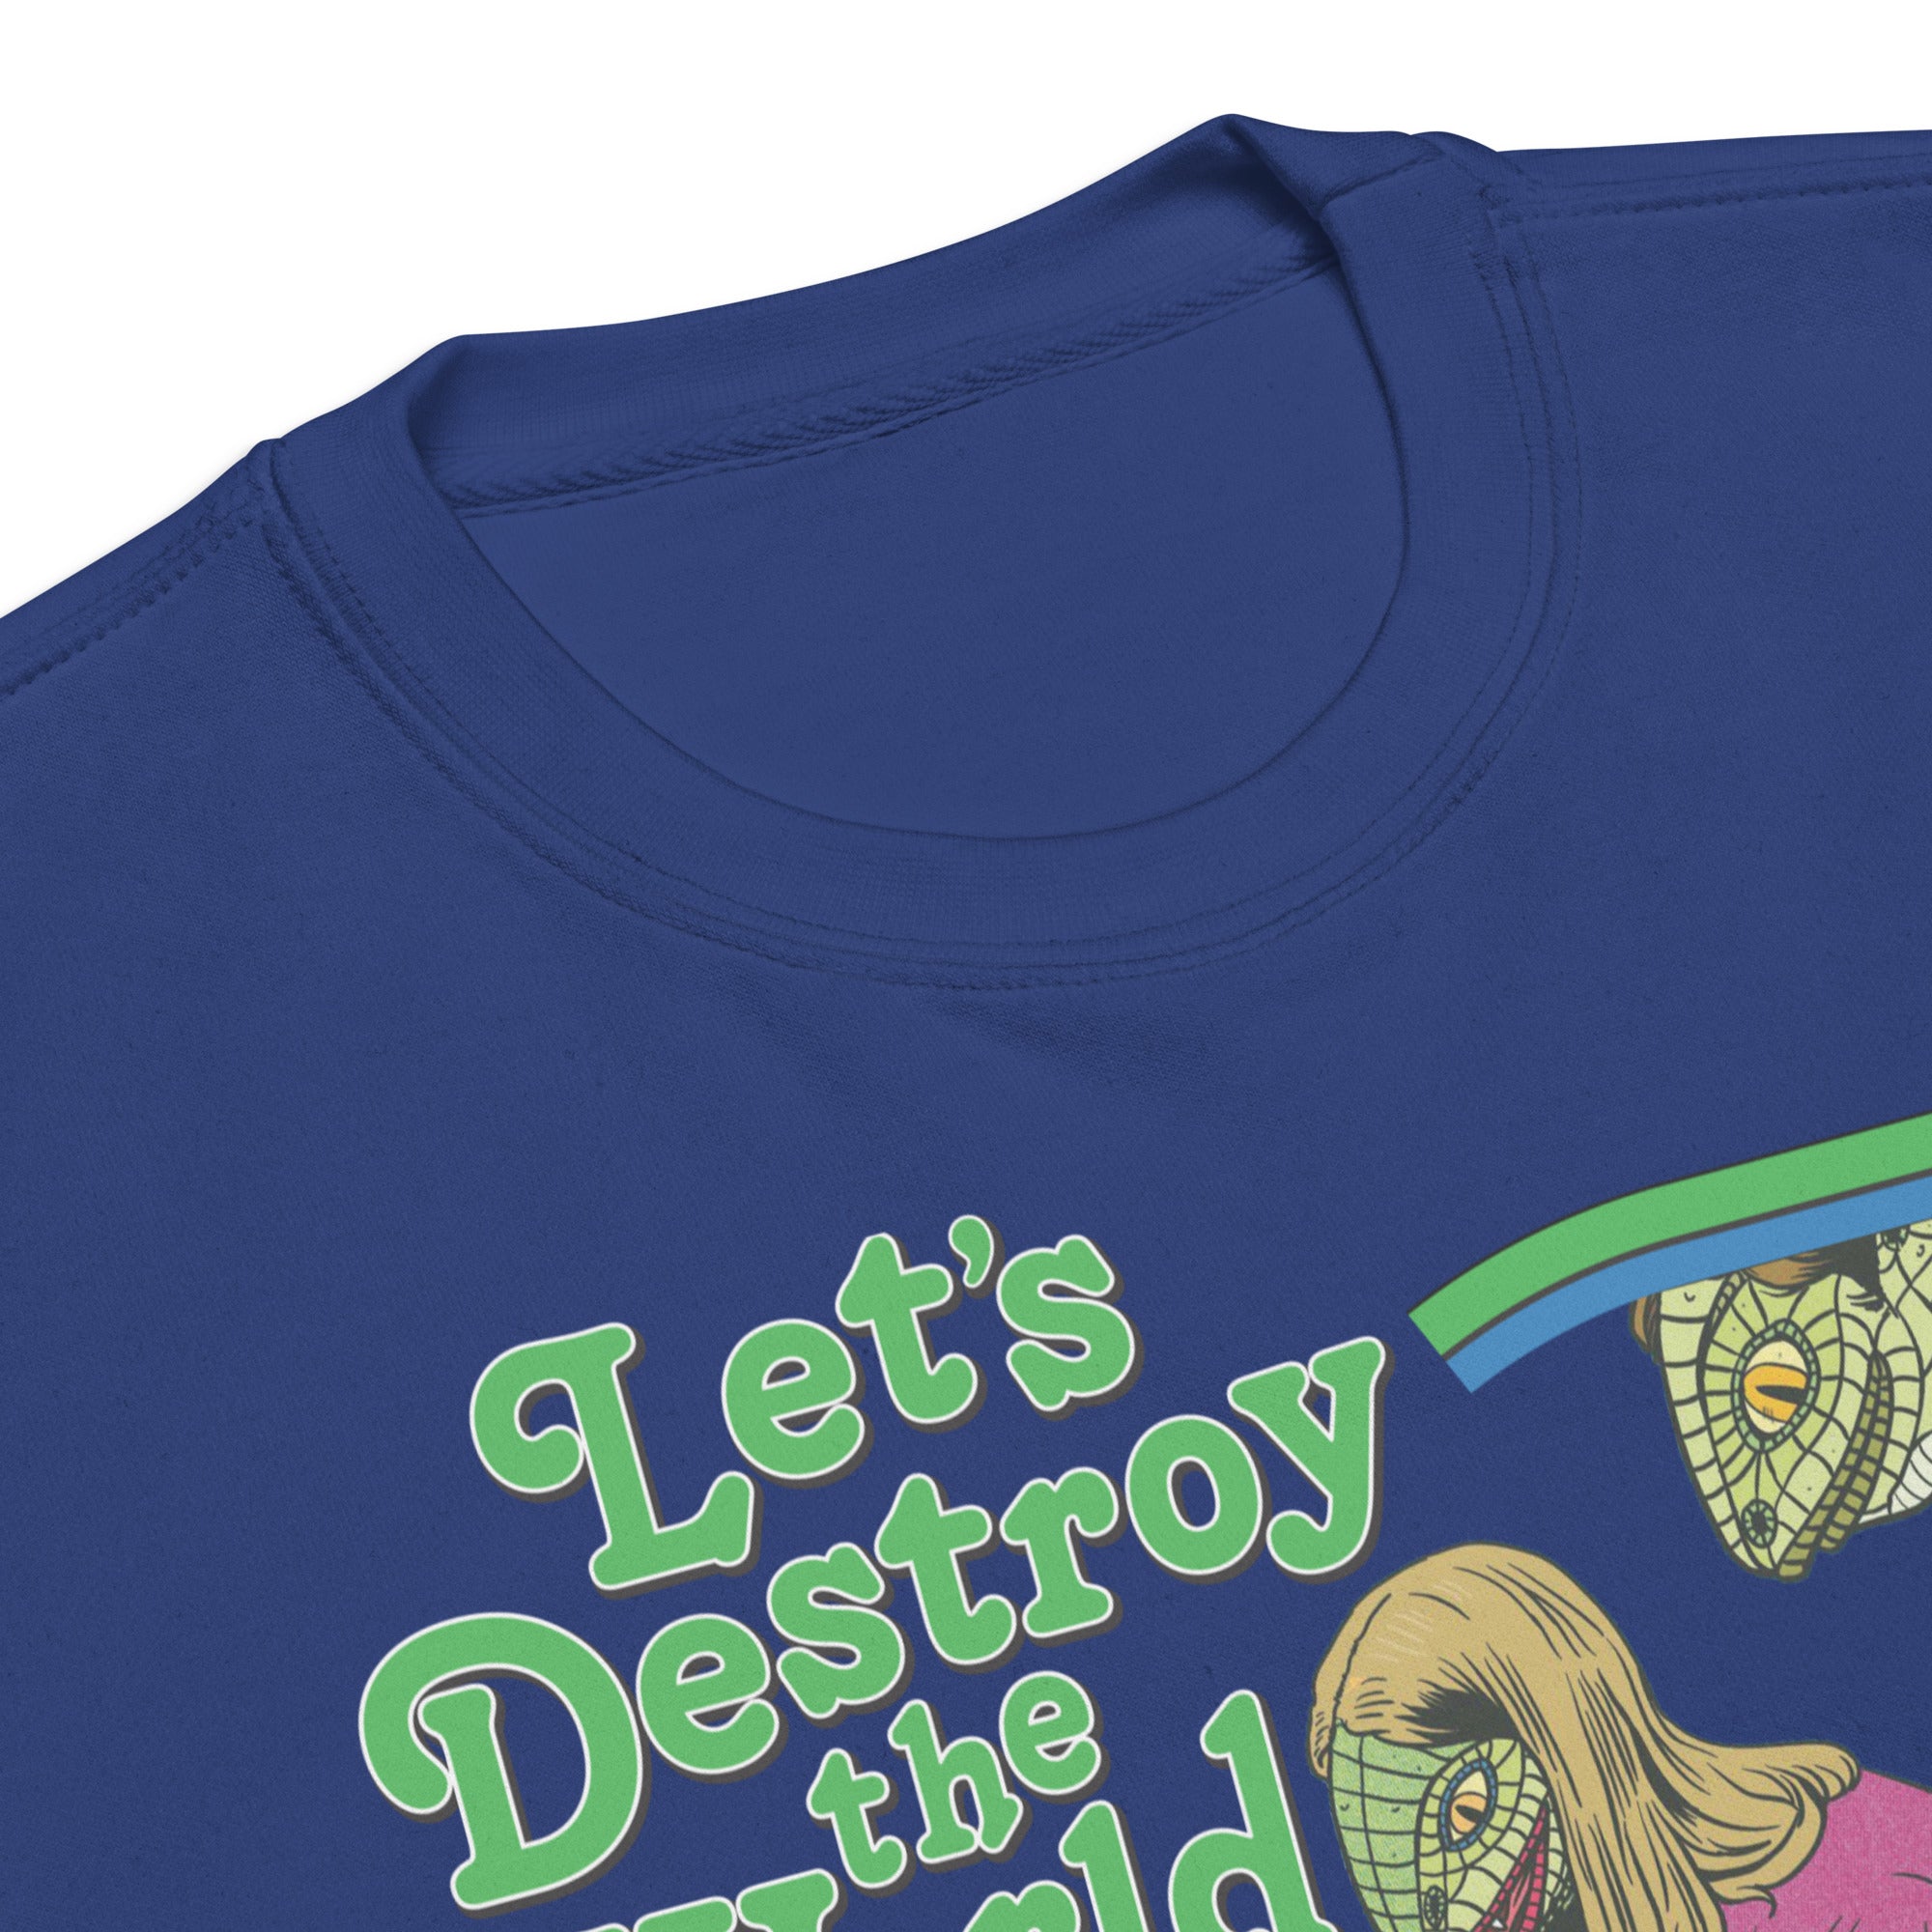 Let's Destroy the World with Social Media Lizard People Crewneck Sweatshirt